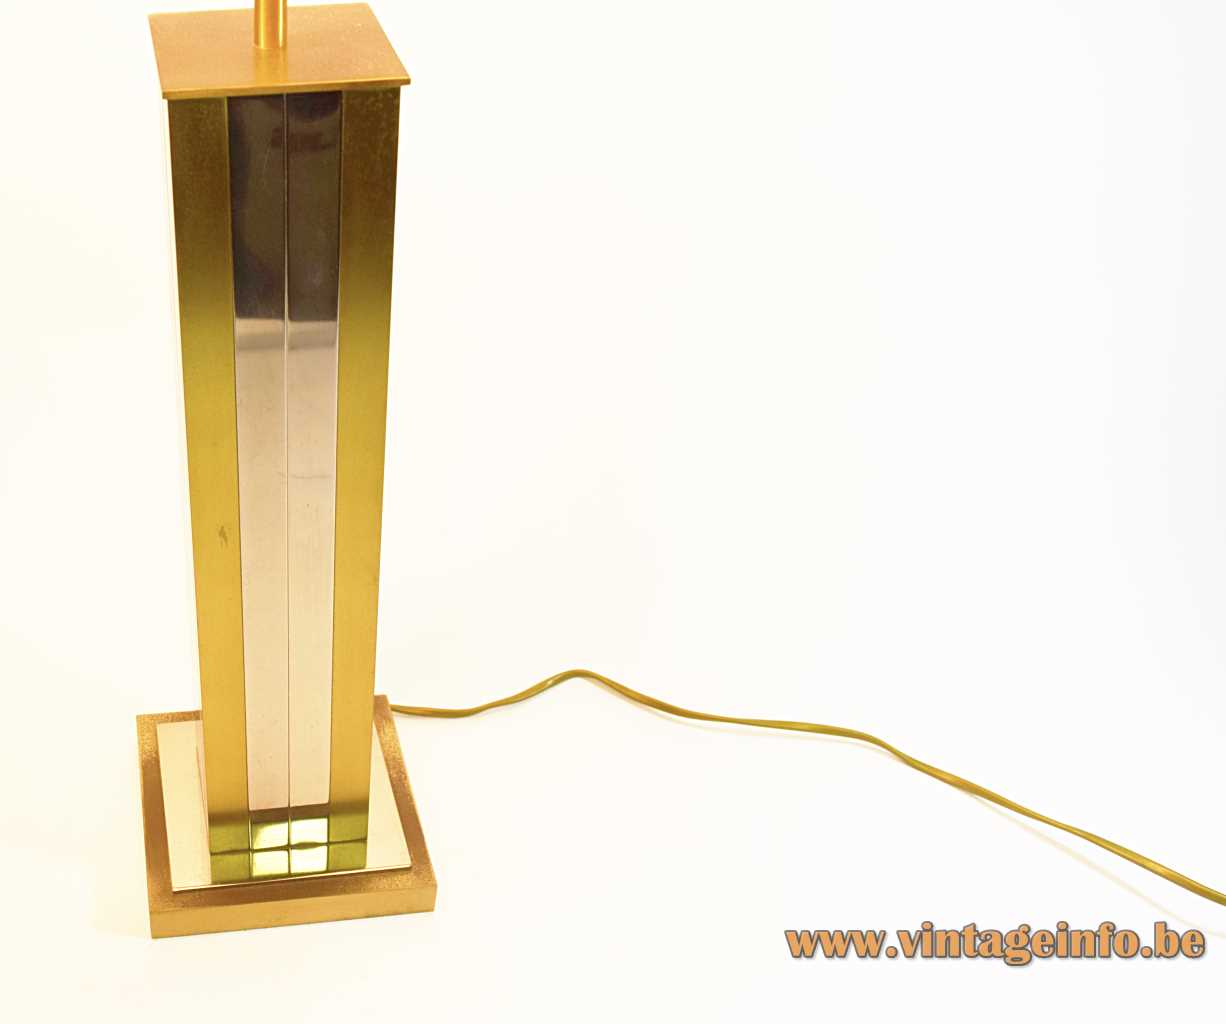 Belgo Chrom brass & chrome table lamp geometric metal skyscraper style pull cord switch 1970s 1980s